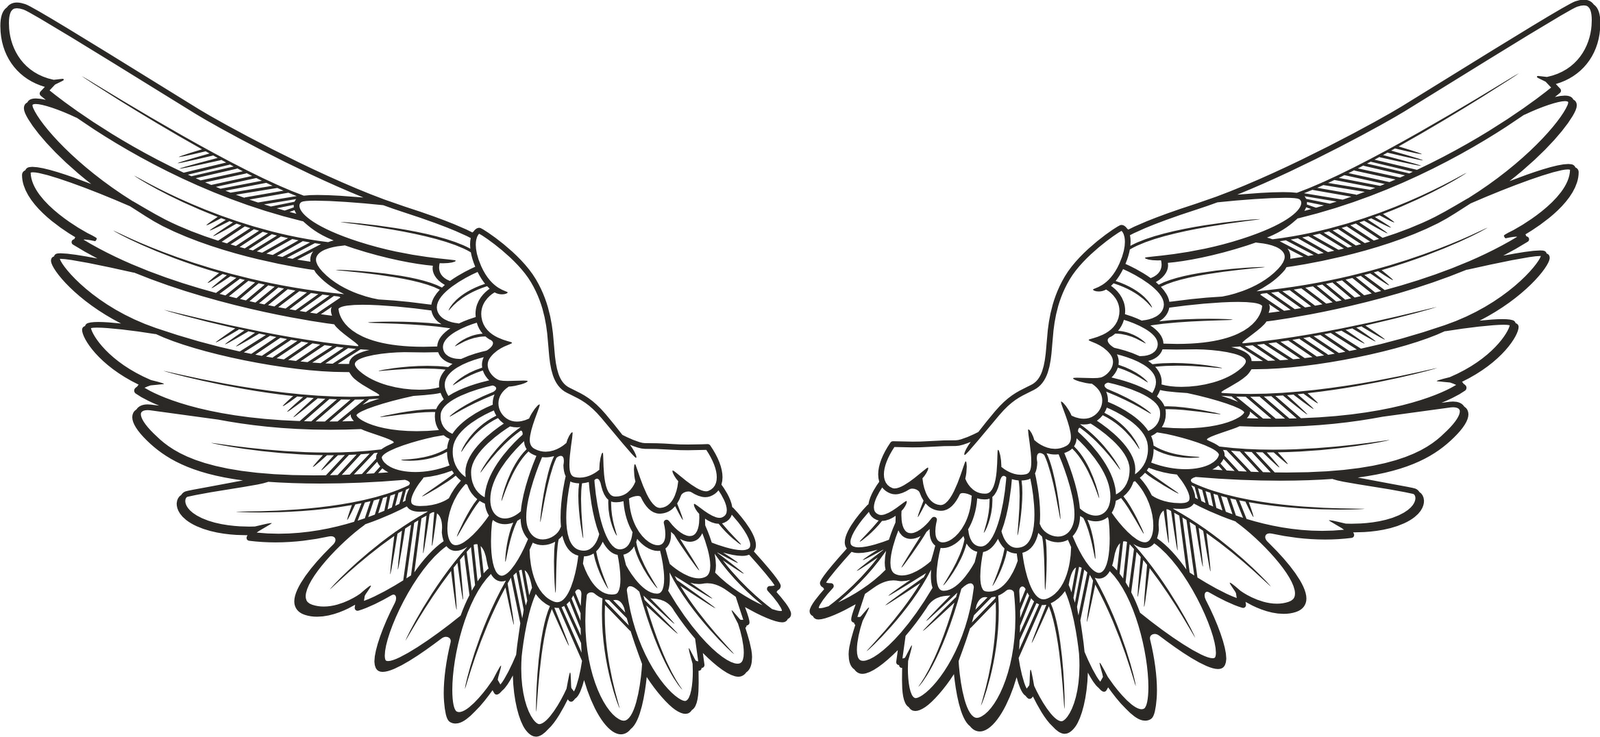 Wings Clip Art. Wings clipart